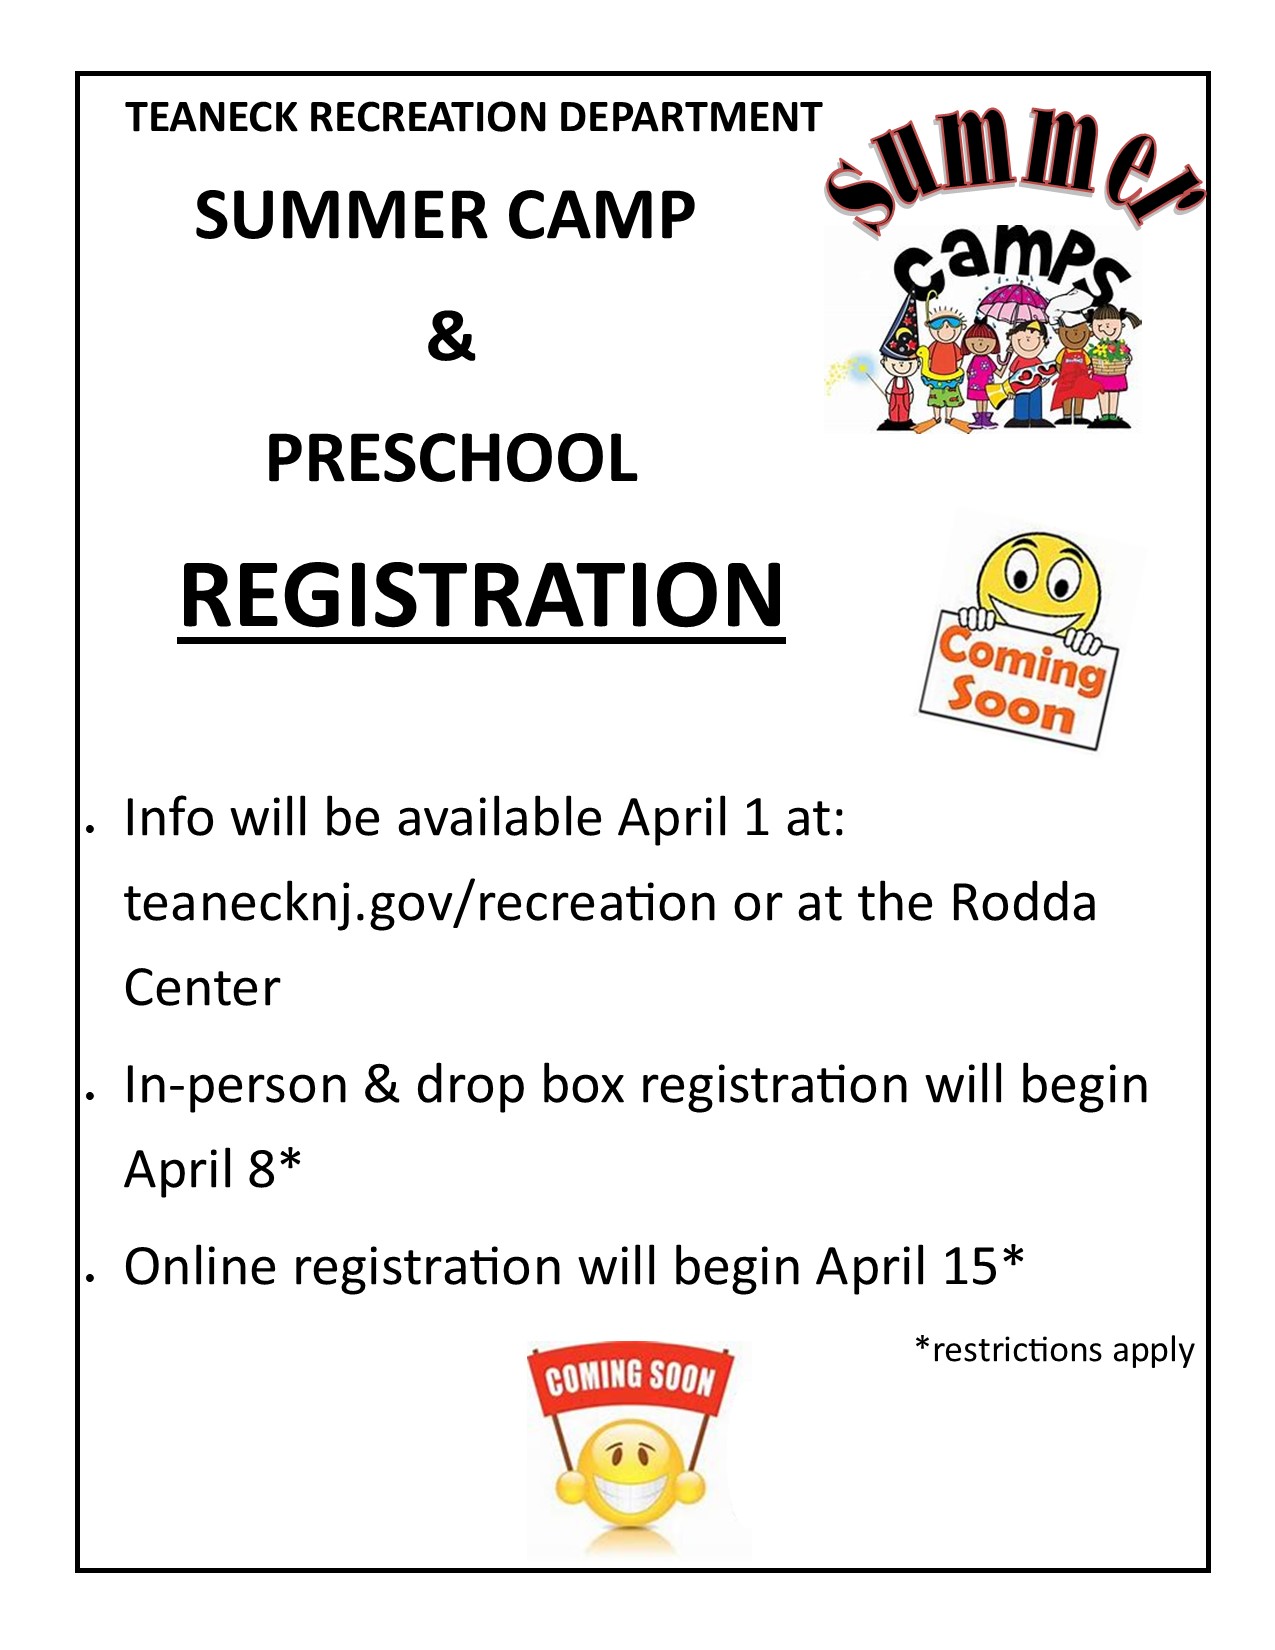 Township of Teaneck New Jersey - Summer Camp & Preschool Registration